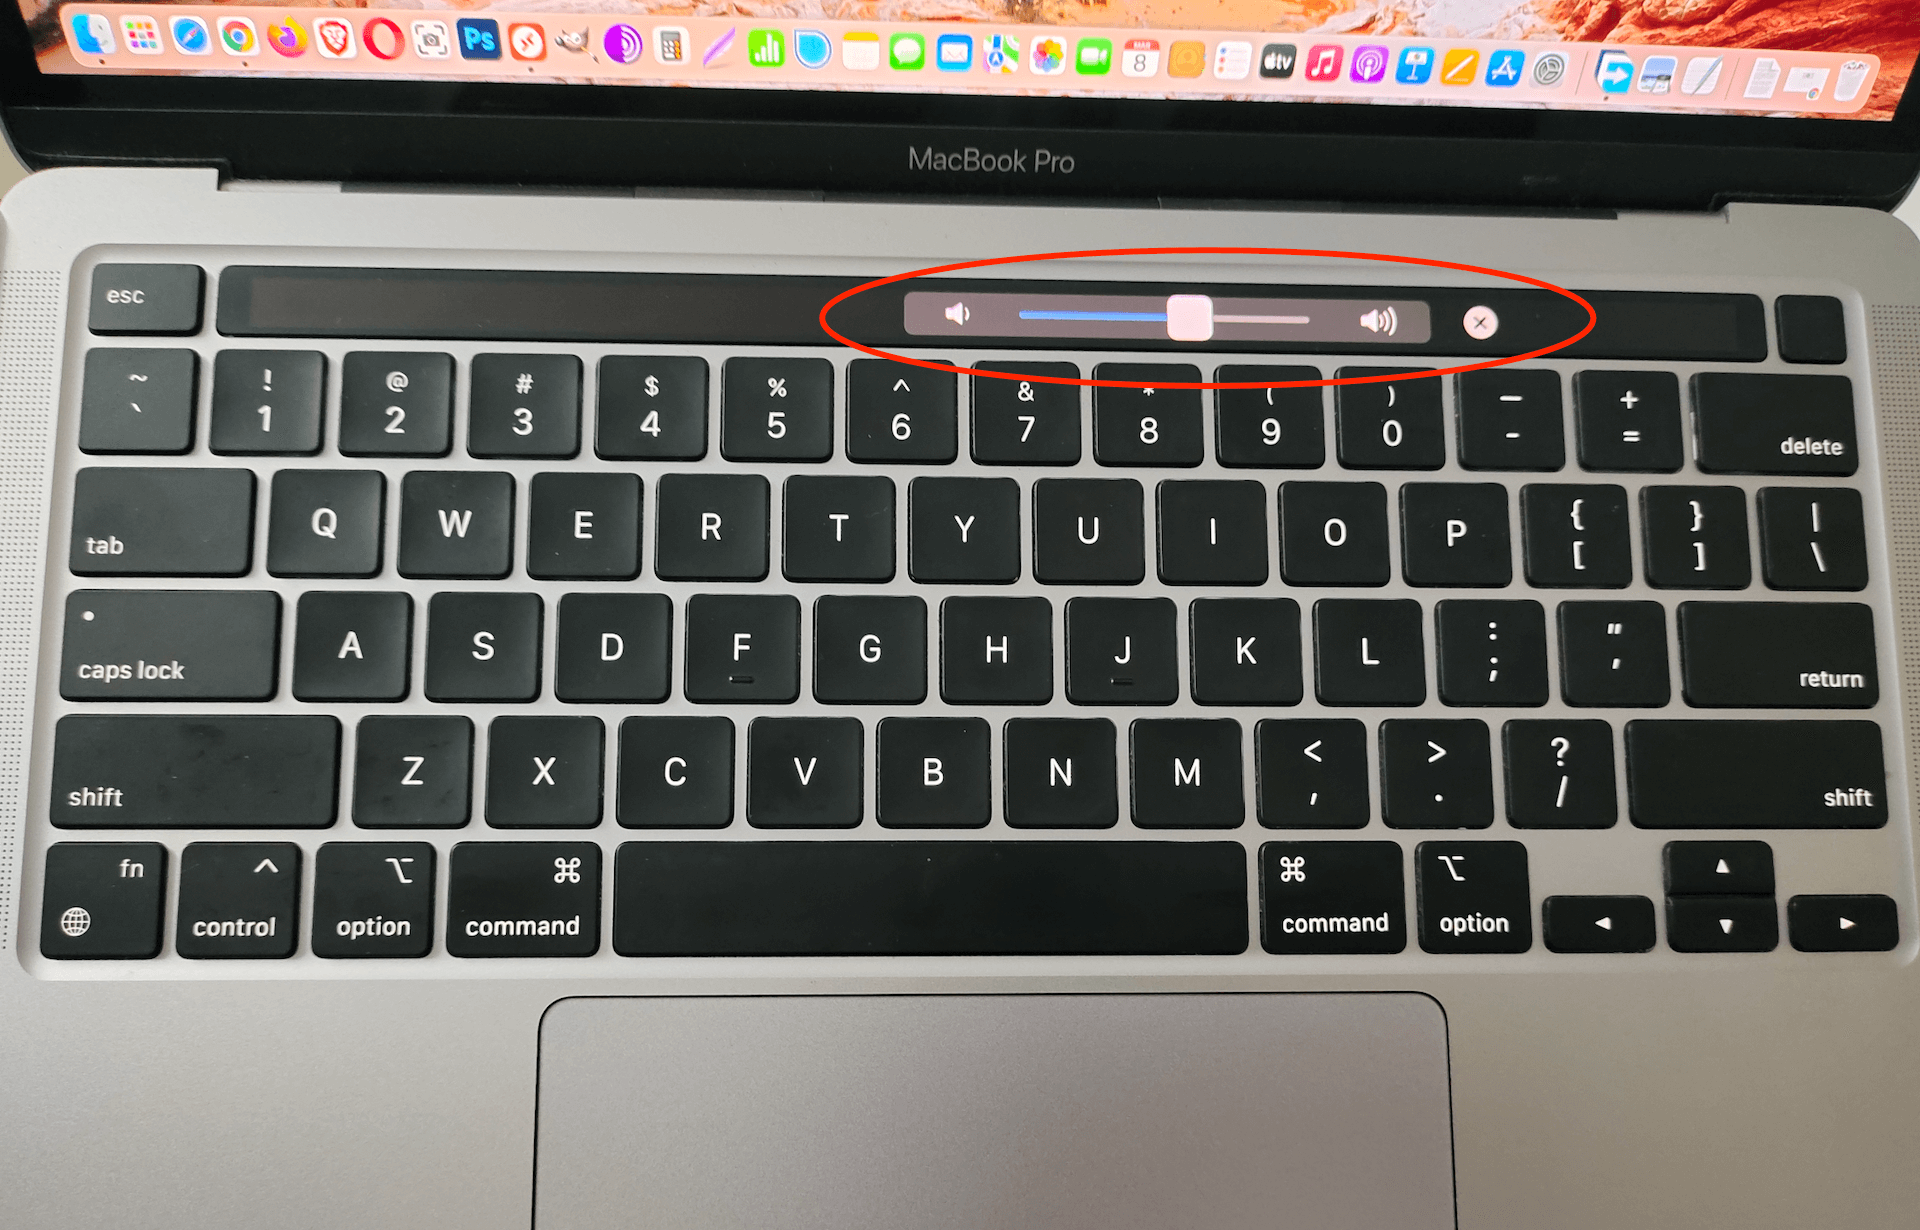 Volume up on mac via touch bar